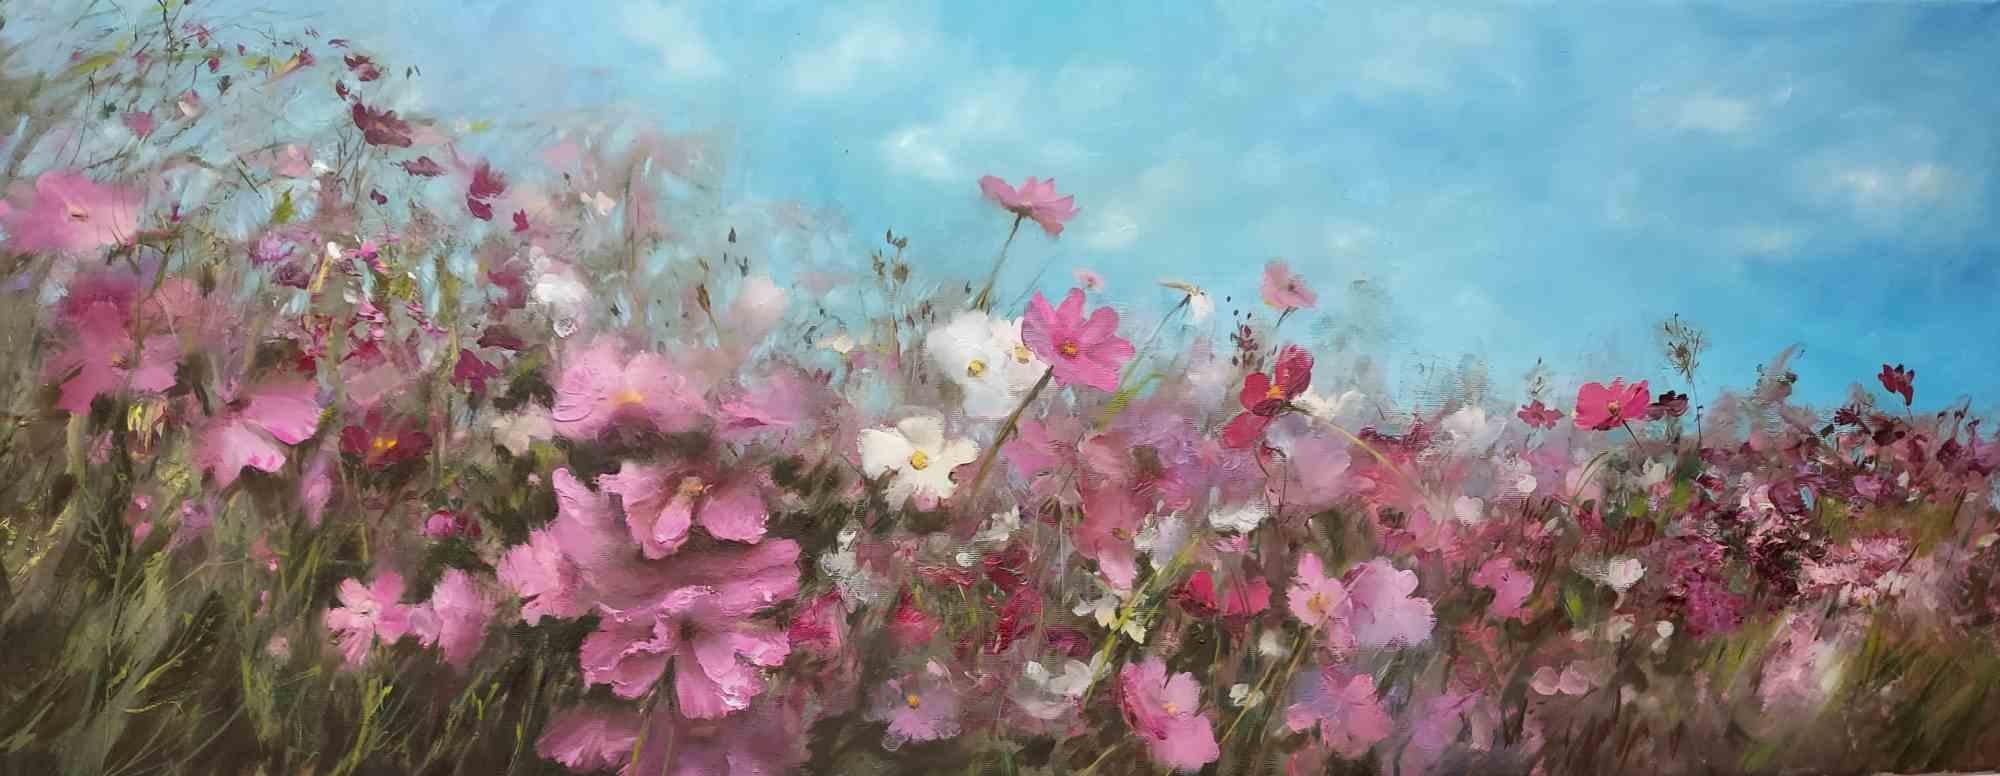 Big Bush of Cosmos Flowers - Oil Paint by Elena Mardashova - 2020